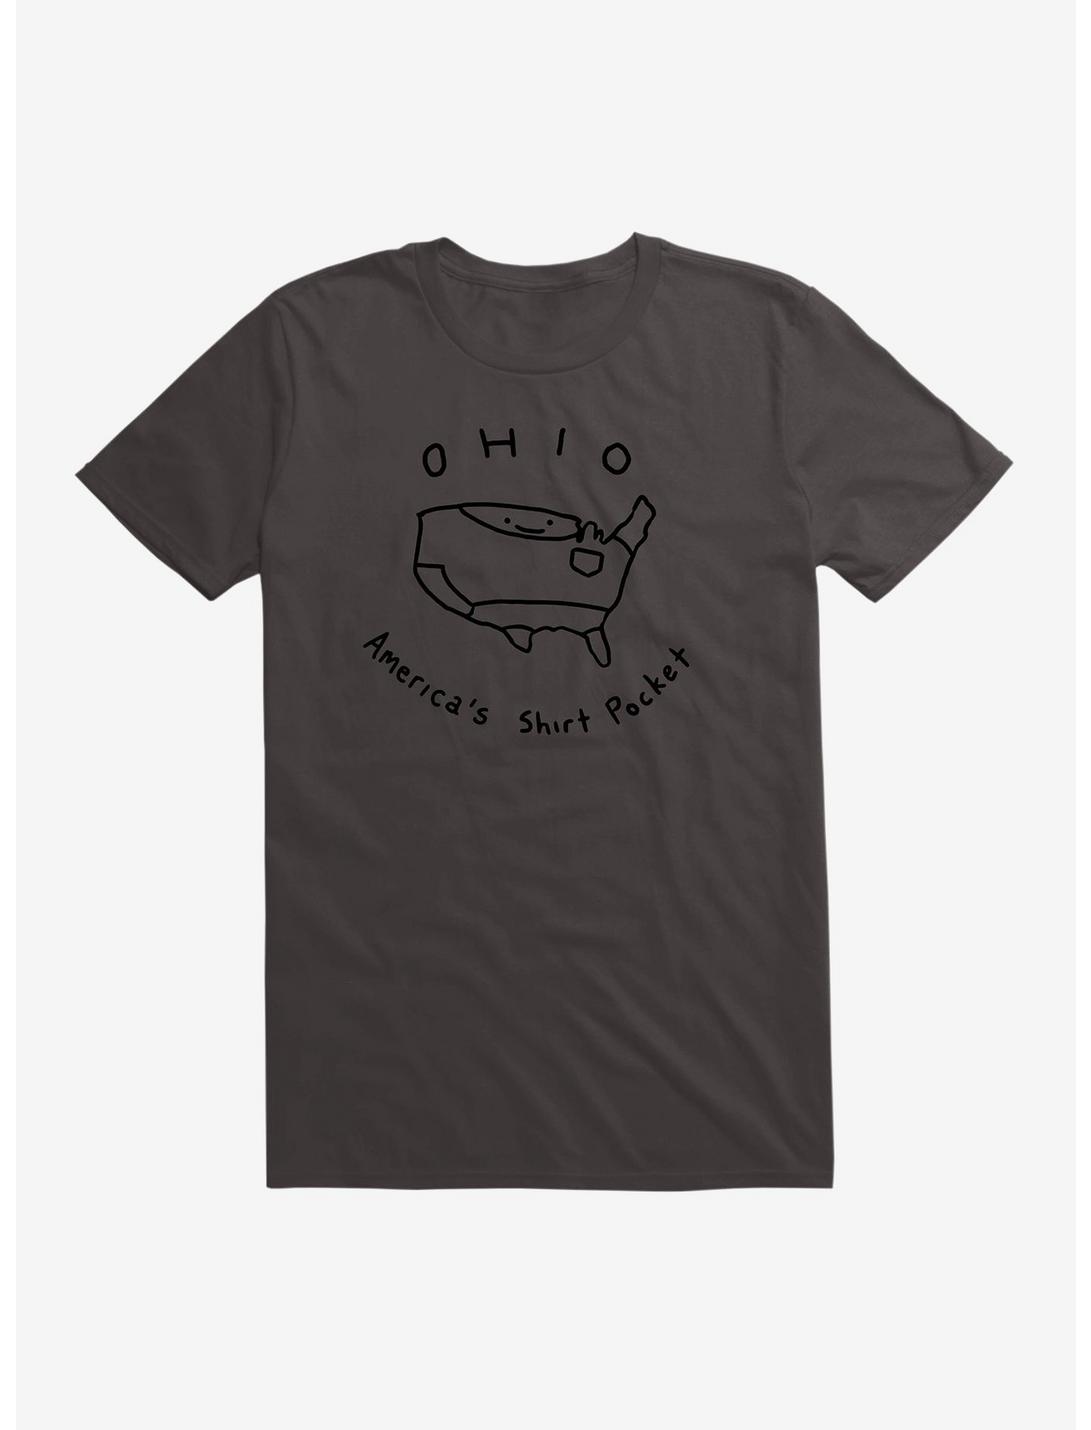 Ohio America's Shirt Pocket T-Shirt, BLACK, hi-res